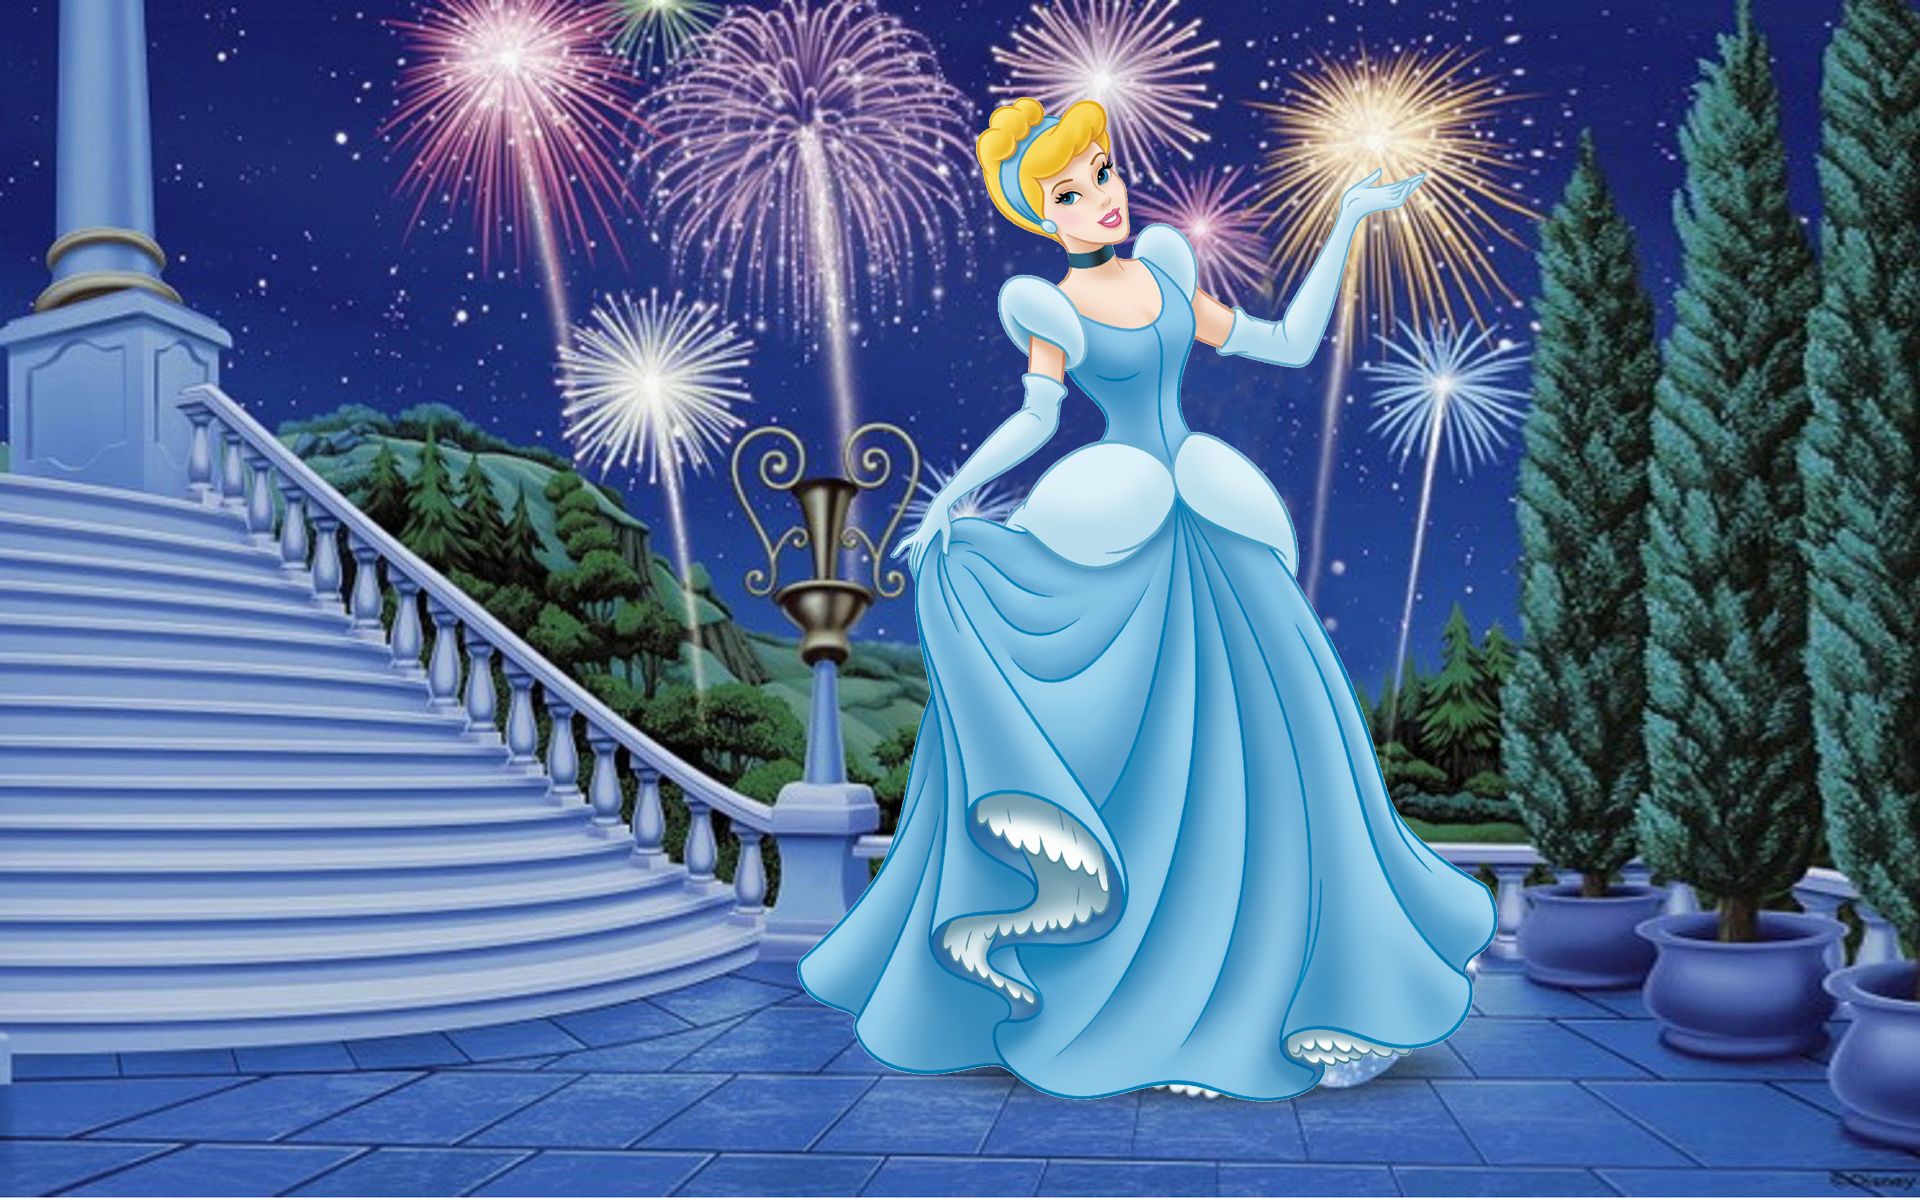 Disney Princess Cinderella Love Story Cartoon Foto Wallpaper Hd For Desktop 19x10 Wallpapers13 Com